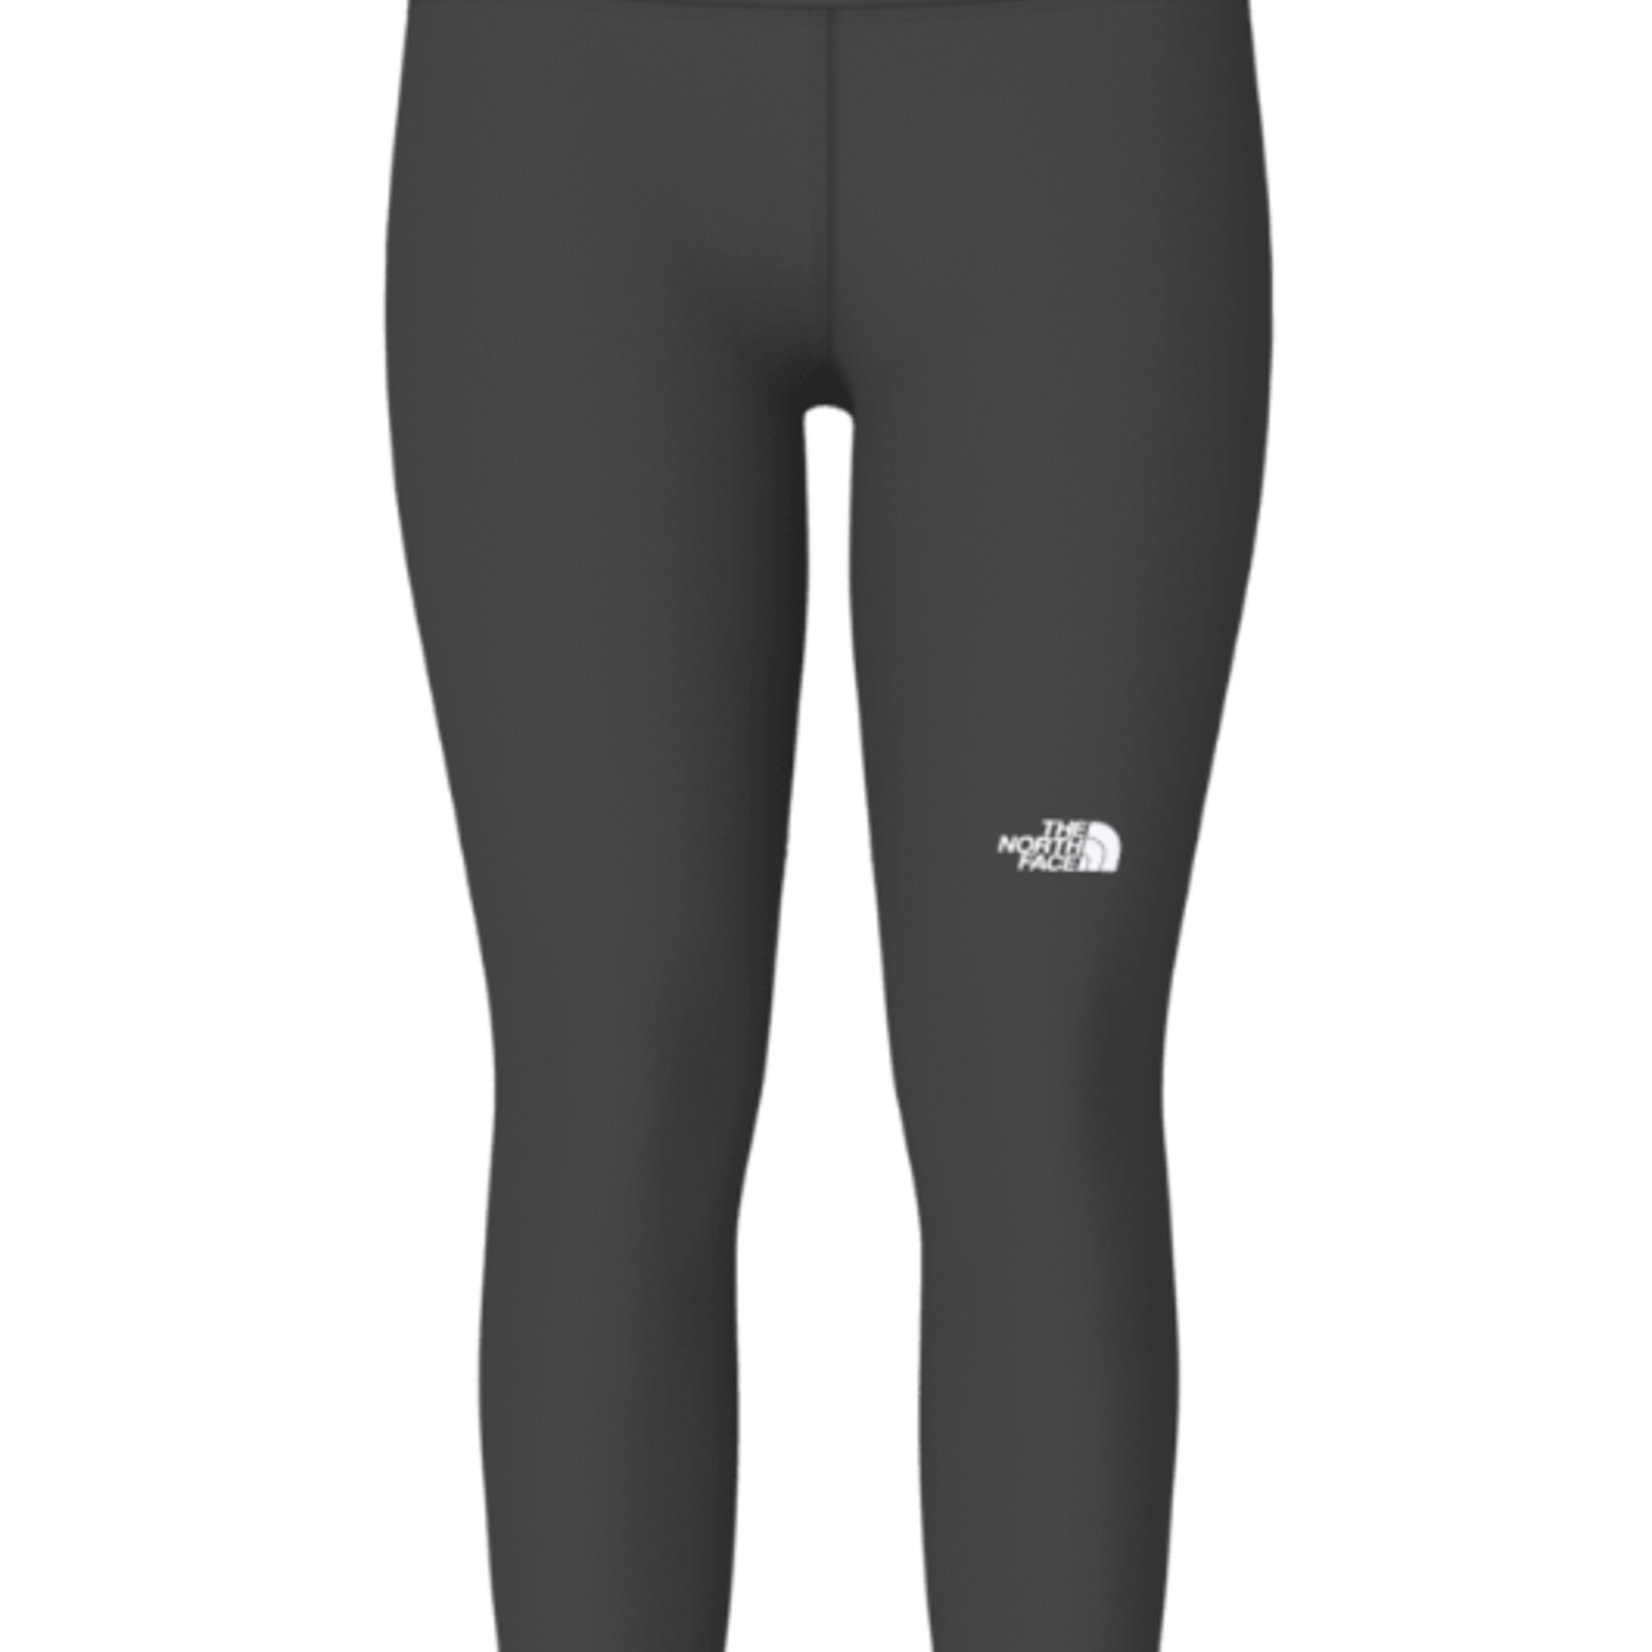 The North Face Training Flex high waist 7/8 leggings in black